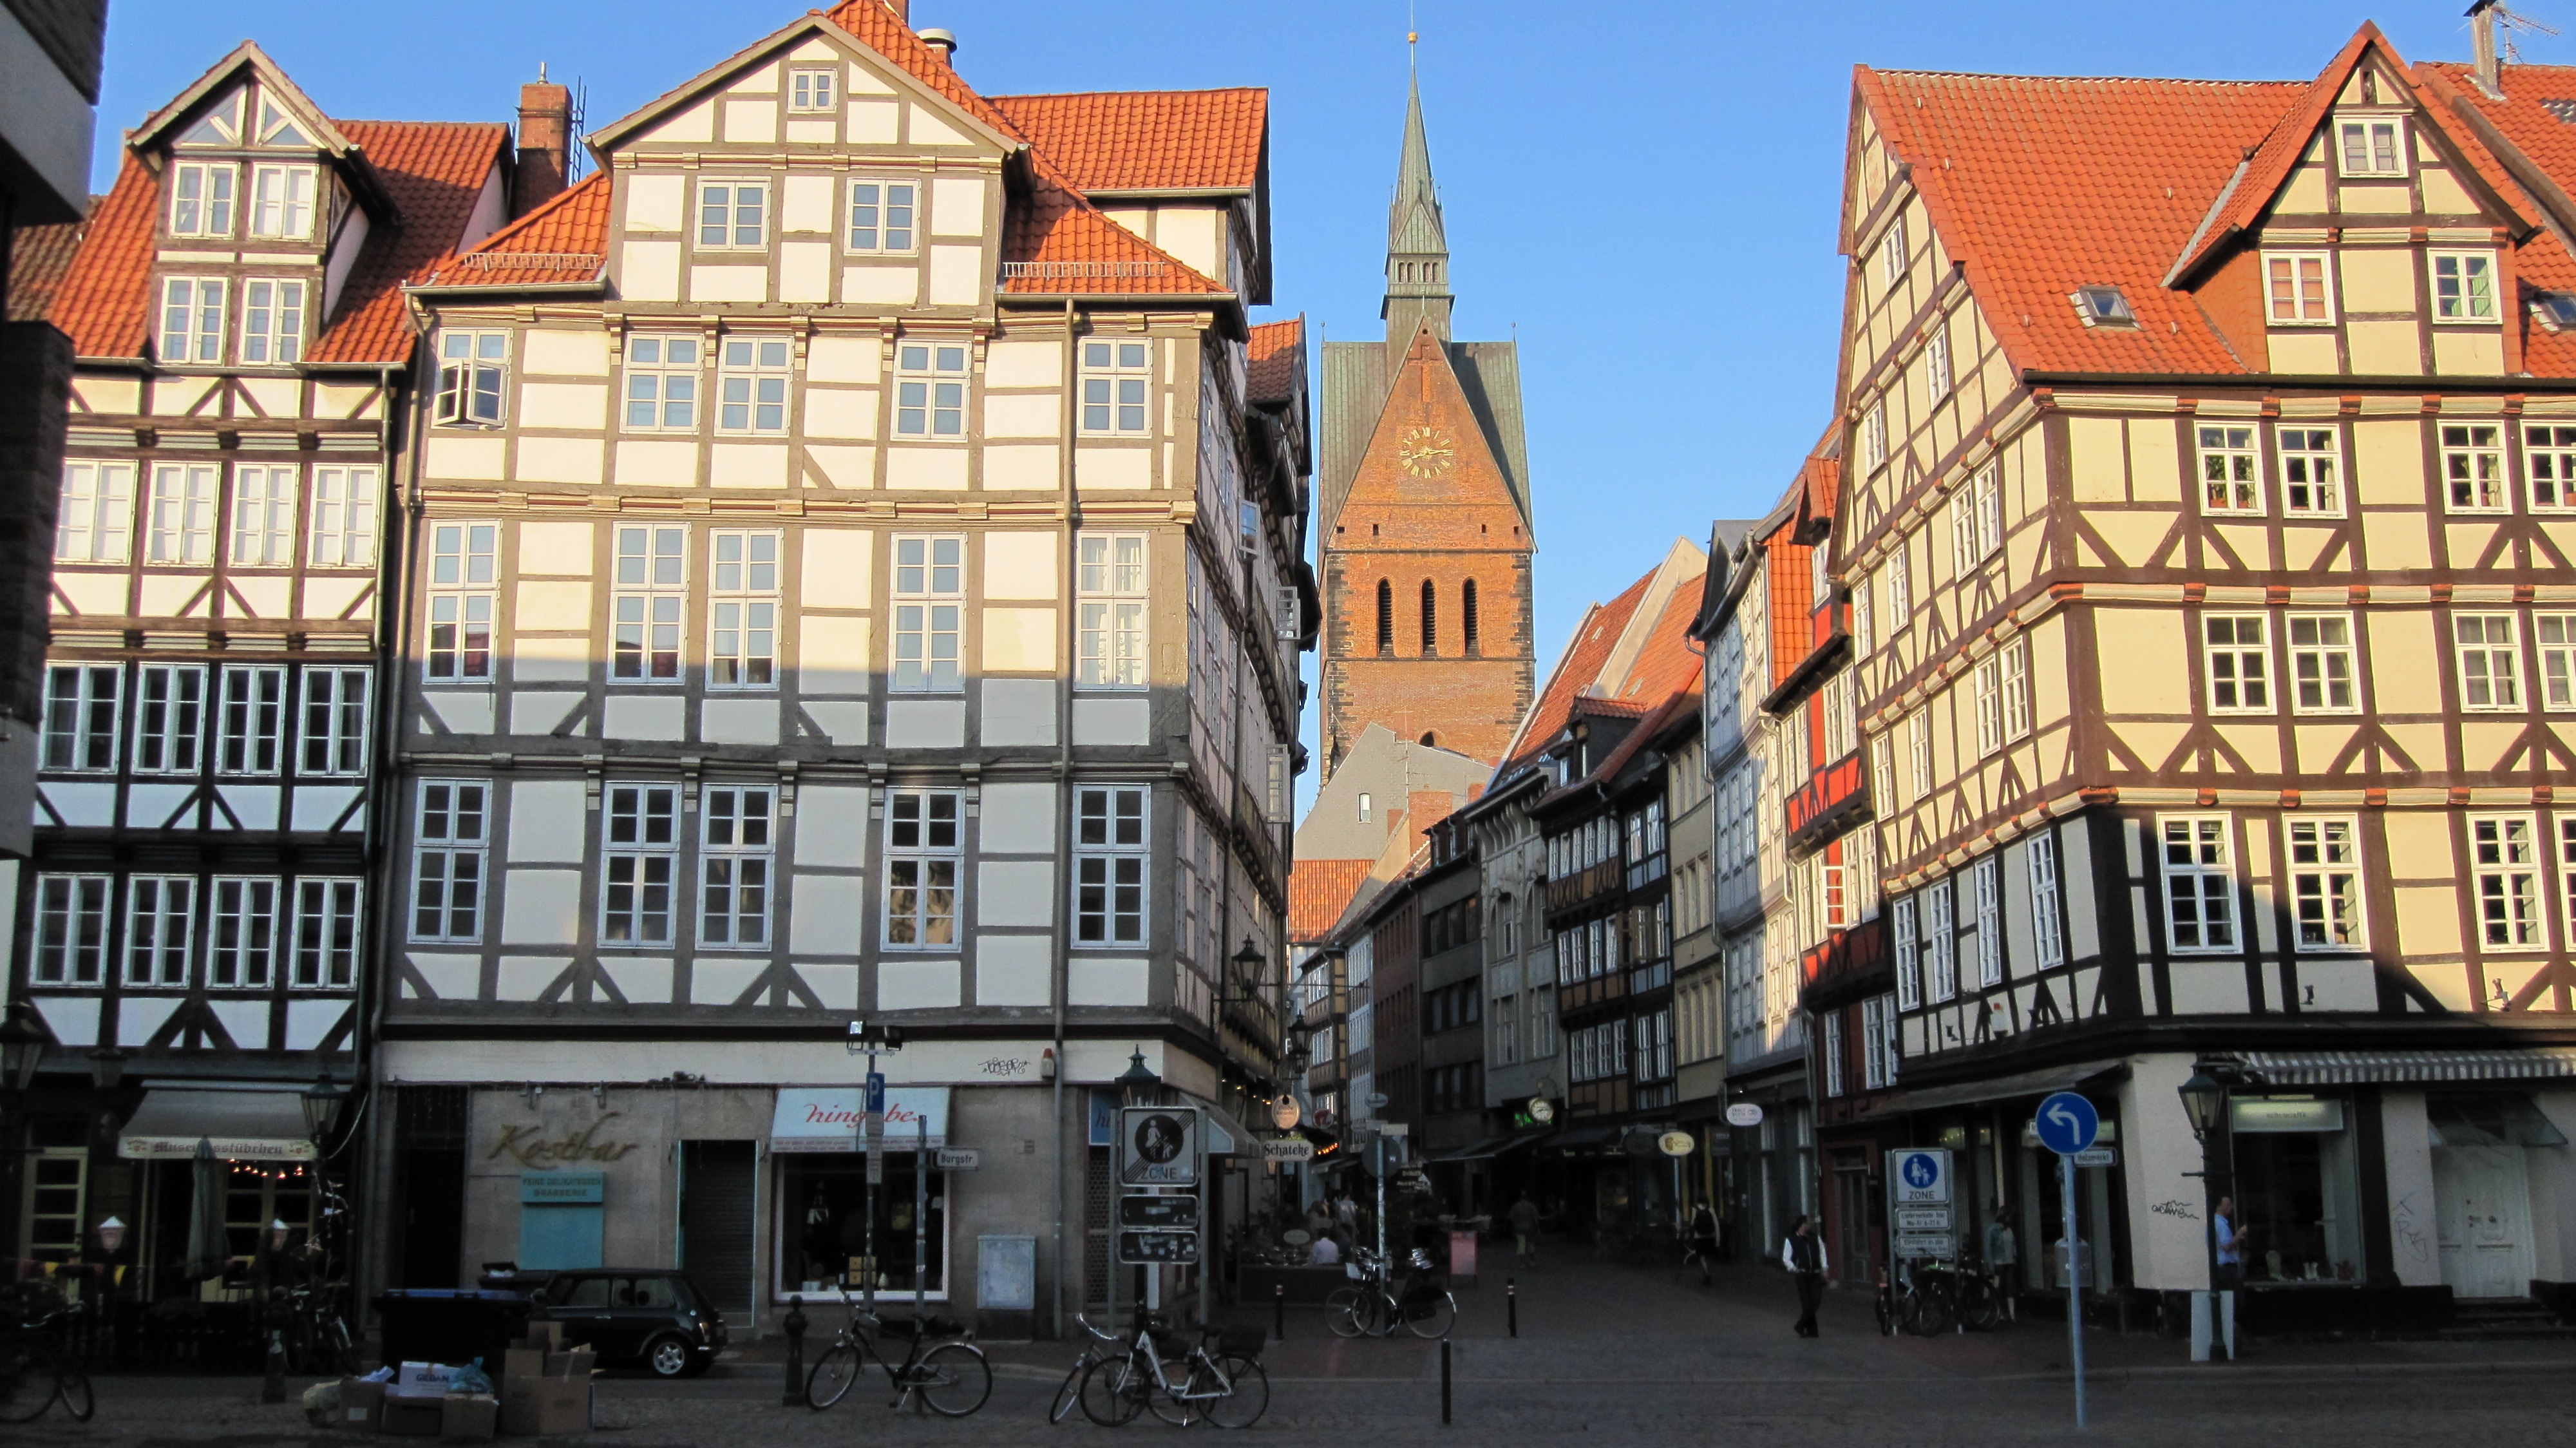 Escape tour in Hanover